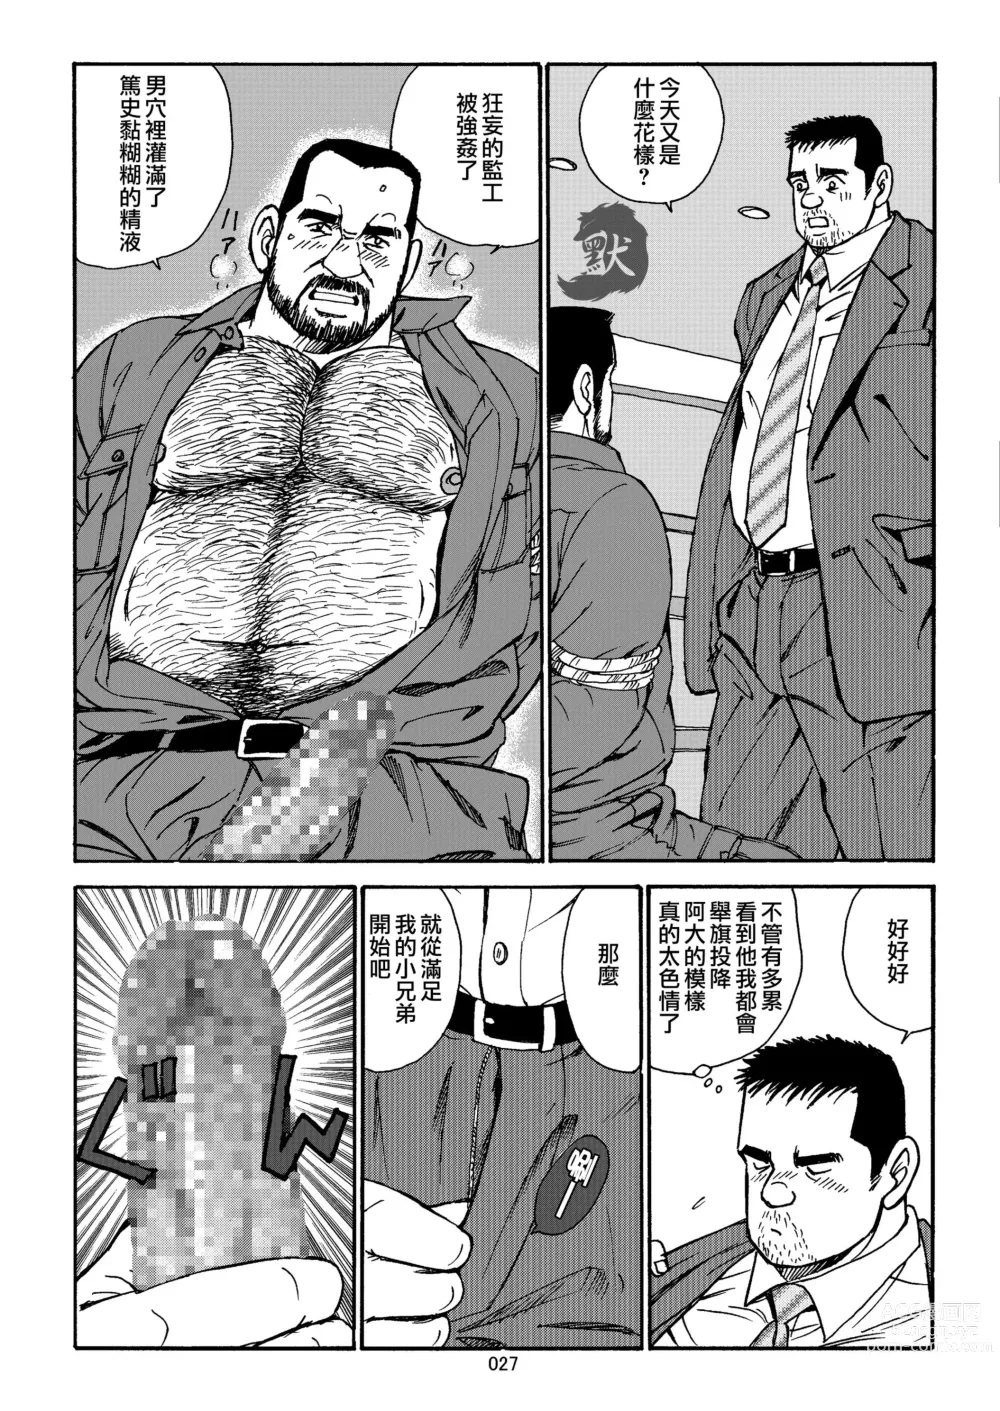 Page 27 of manga おいしい性活